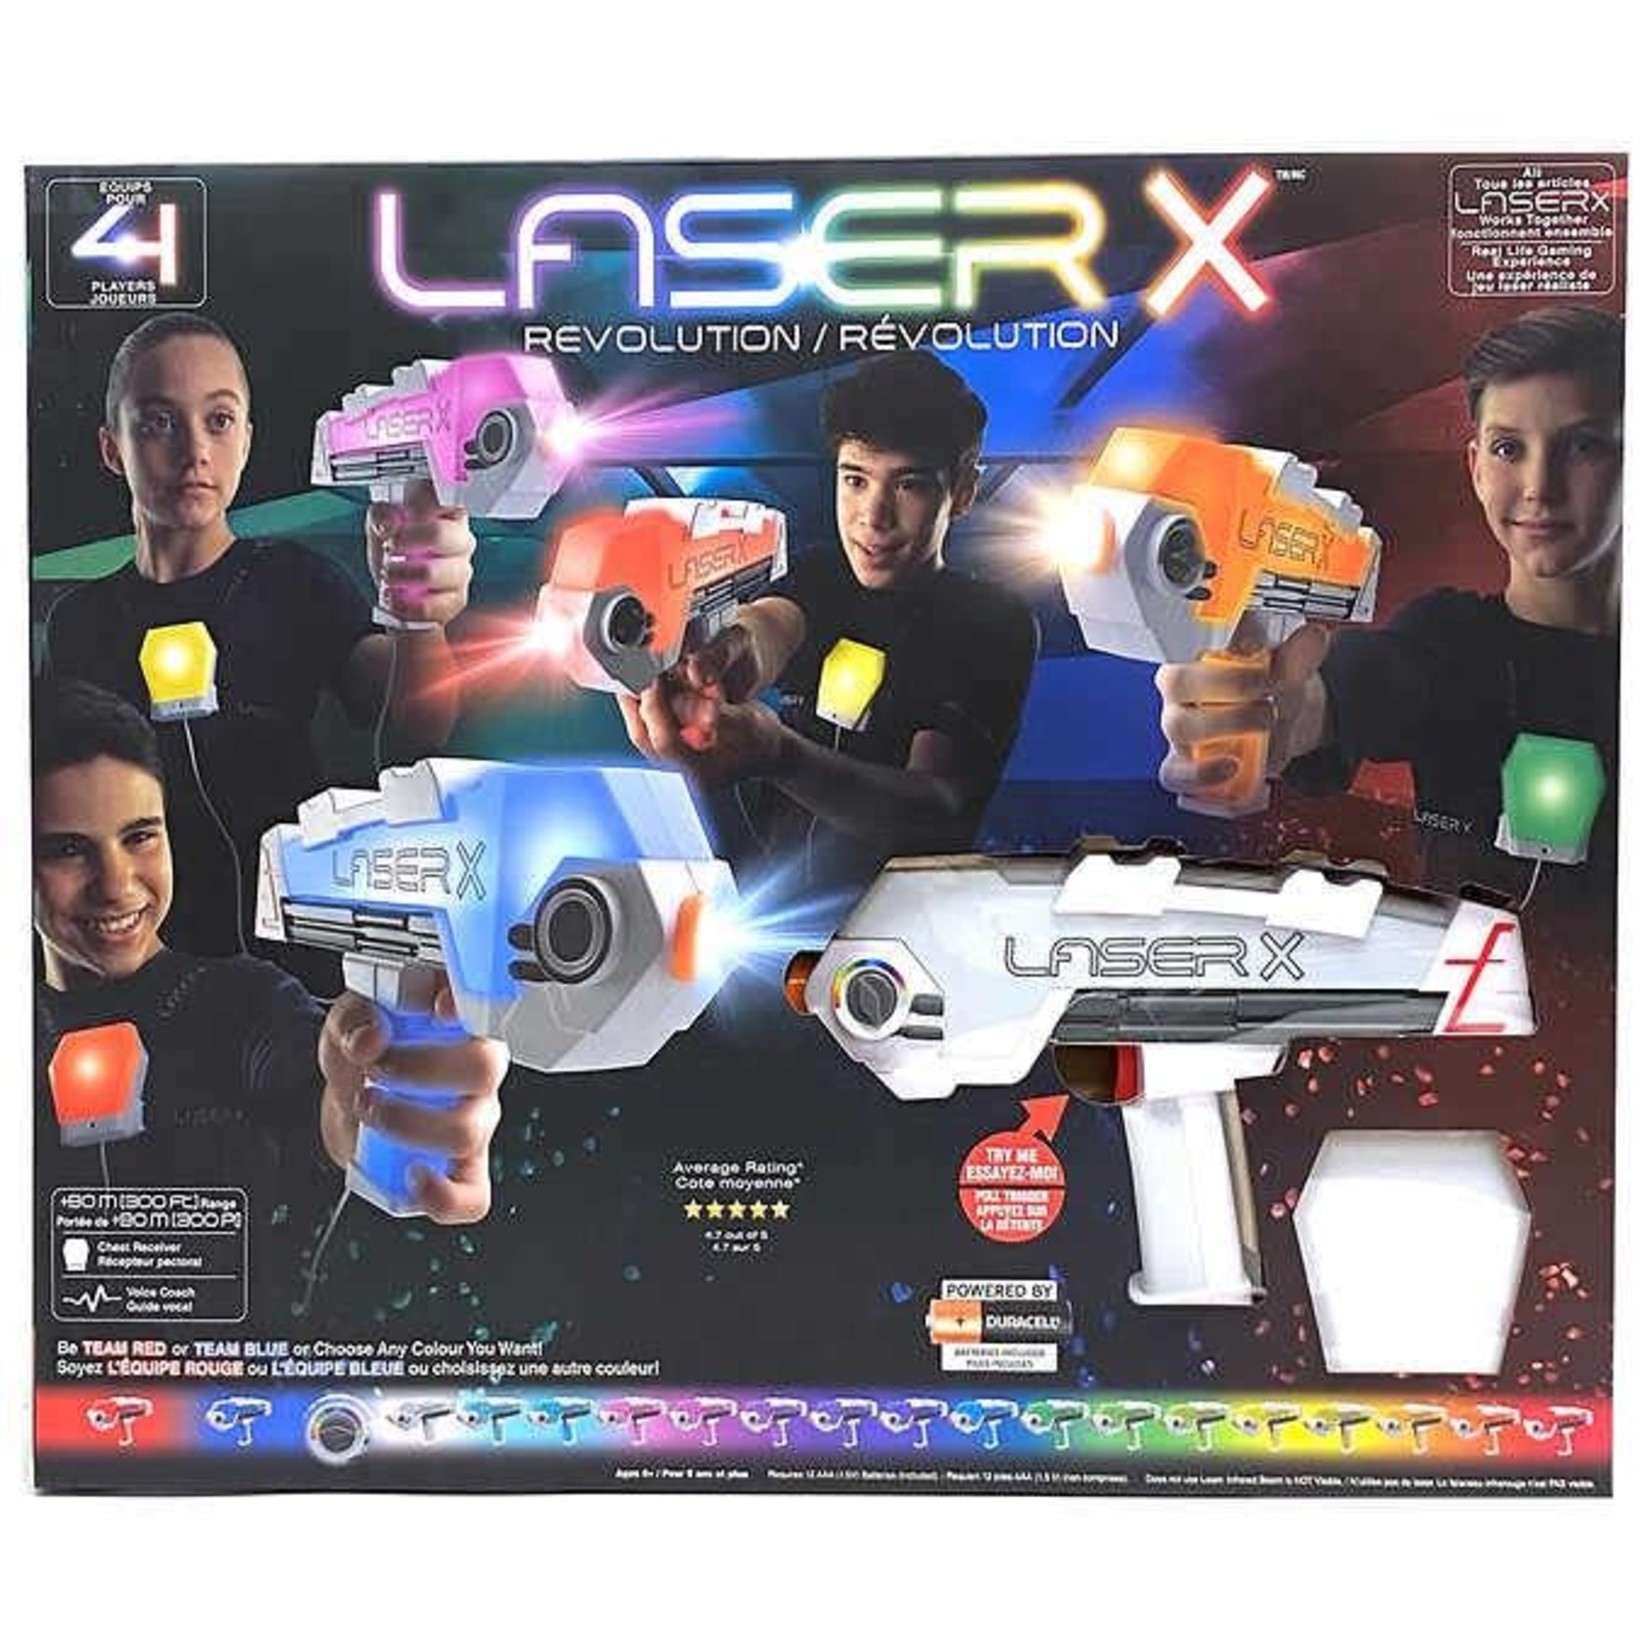 Laser X Revolution 4-pack